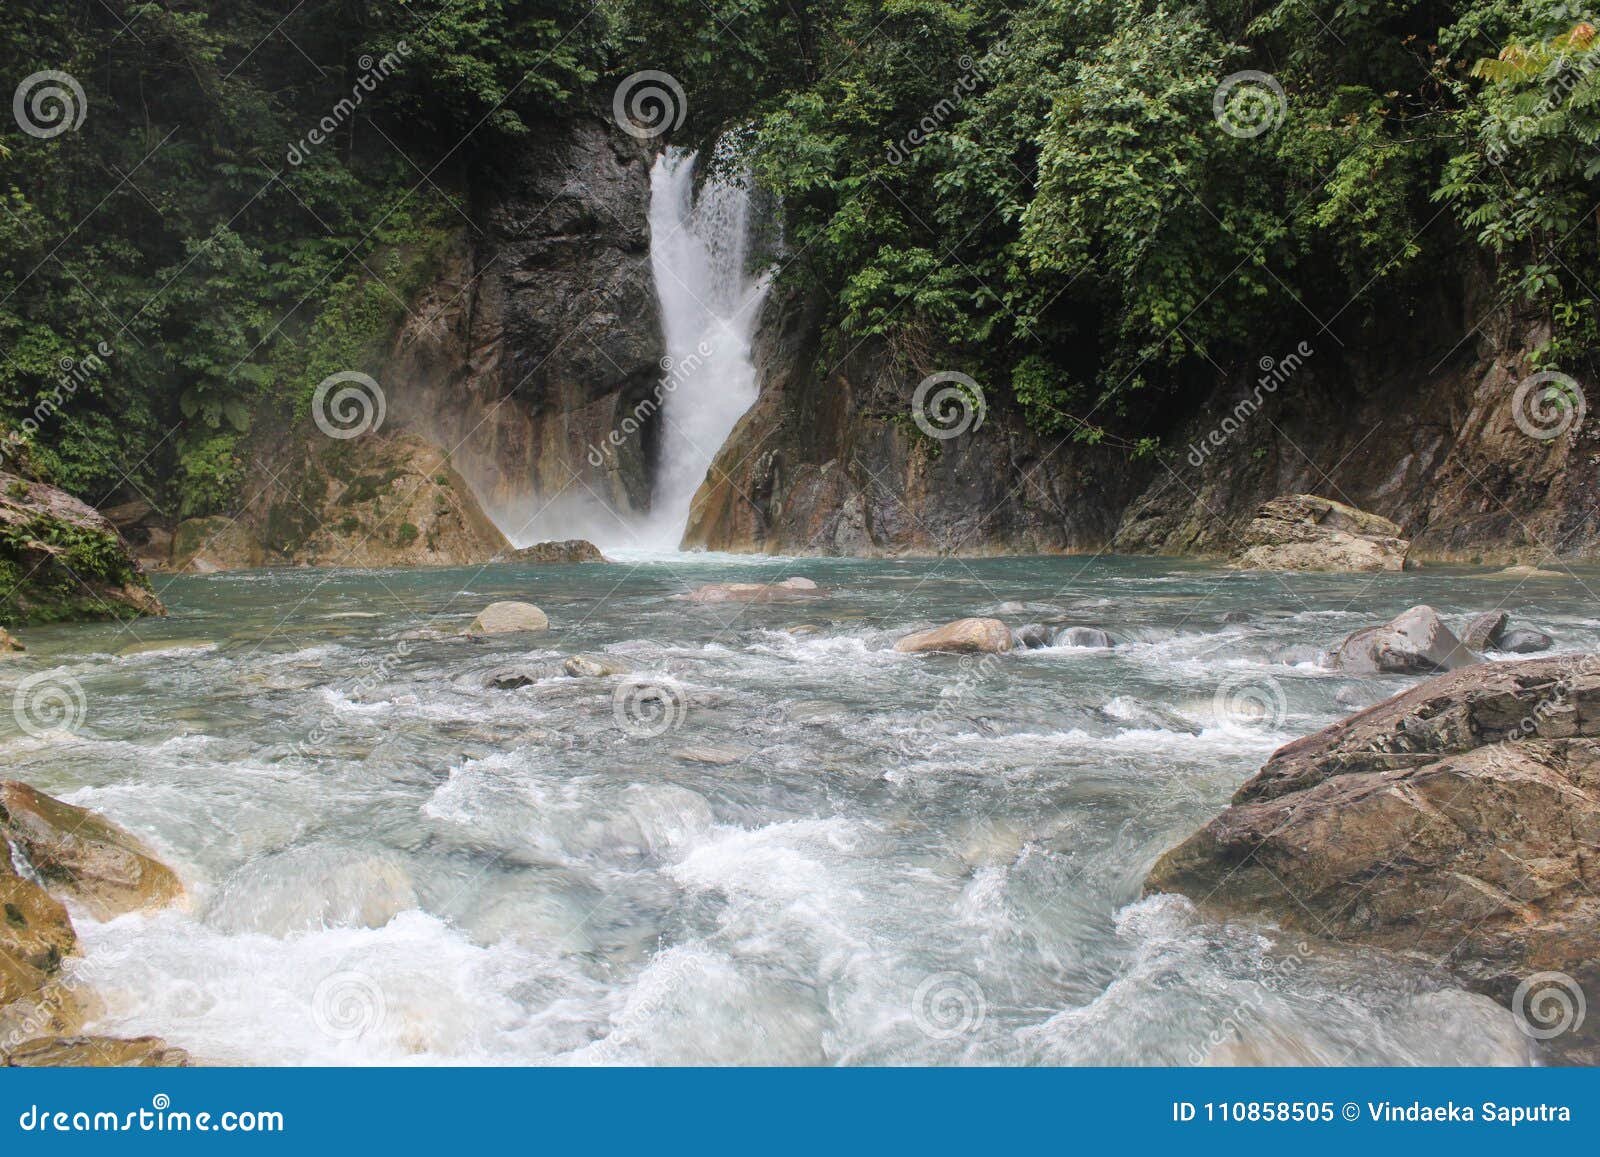 Beauty Scenary Waterfall Sipagogo in the Situak,sumatra Barat Province